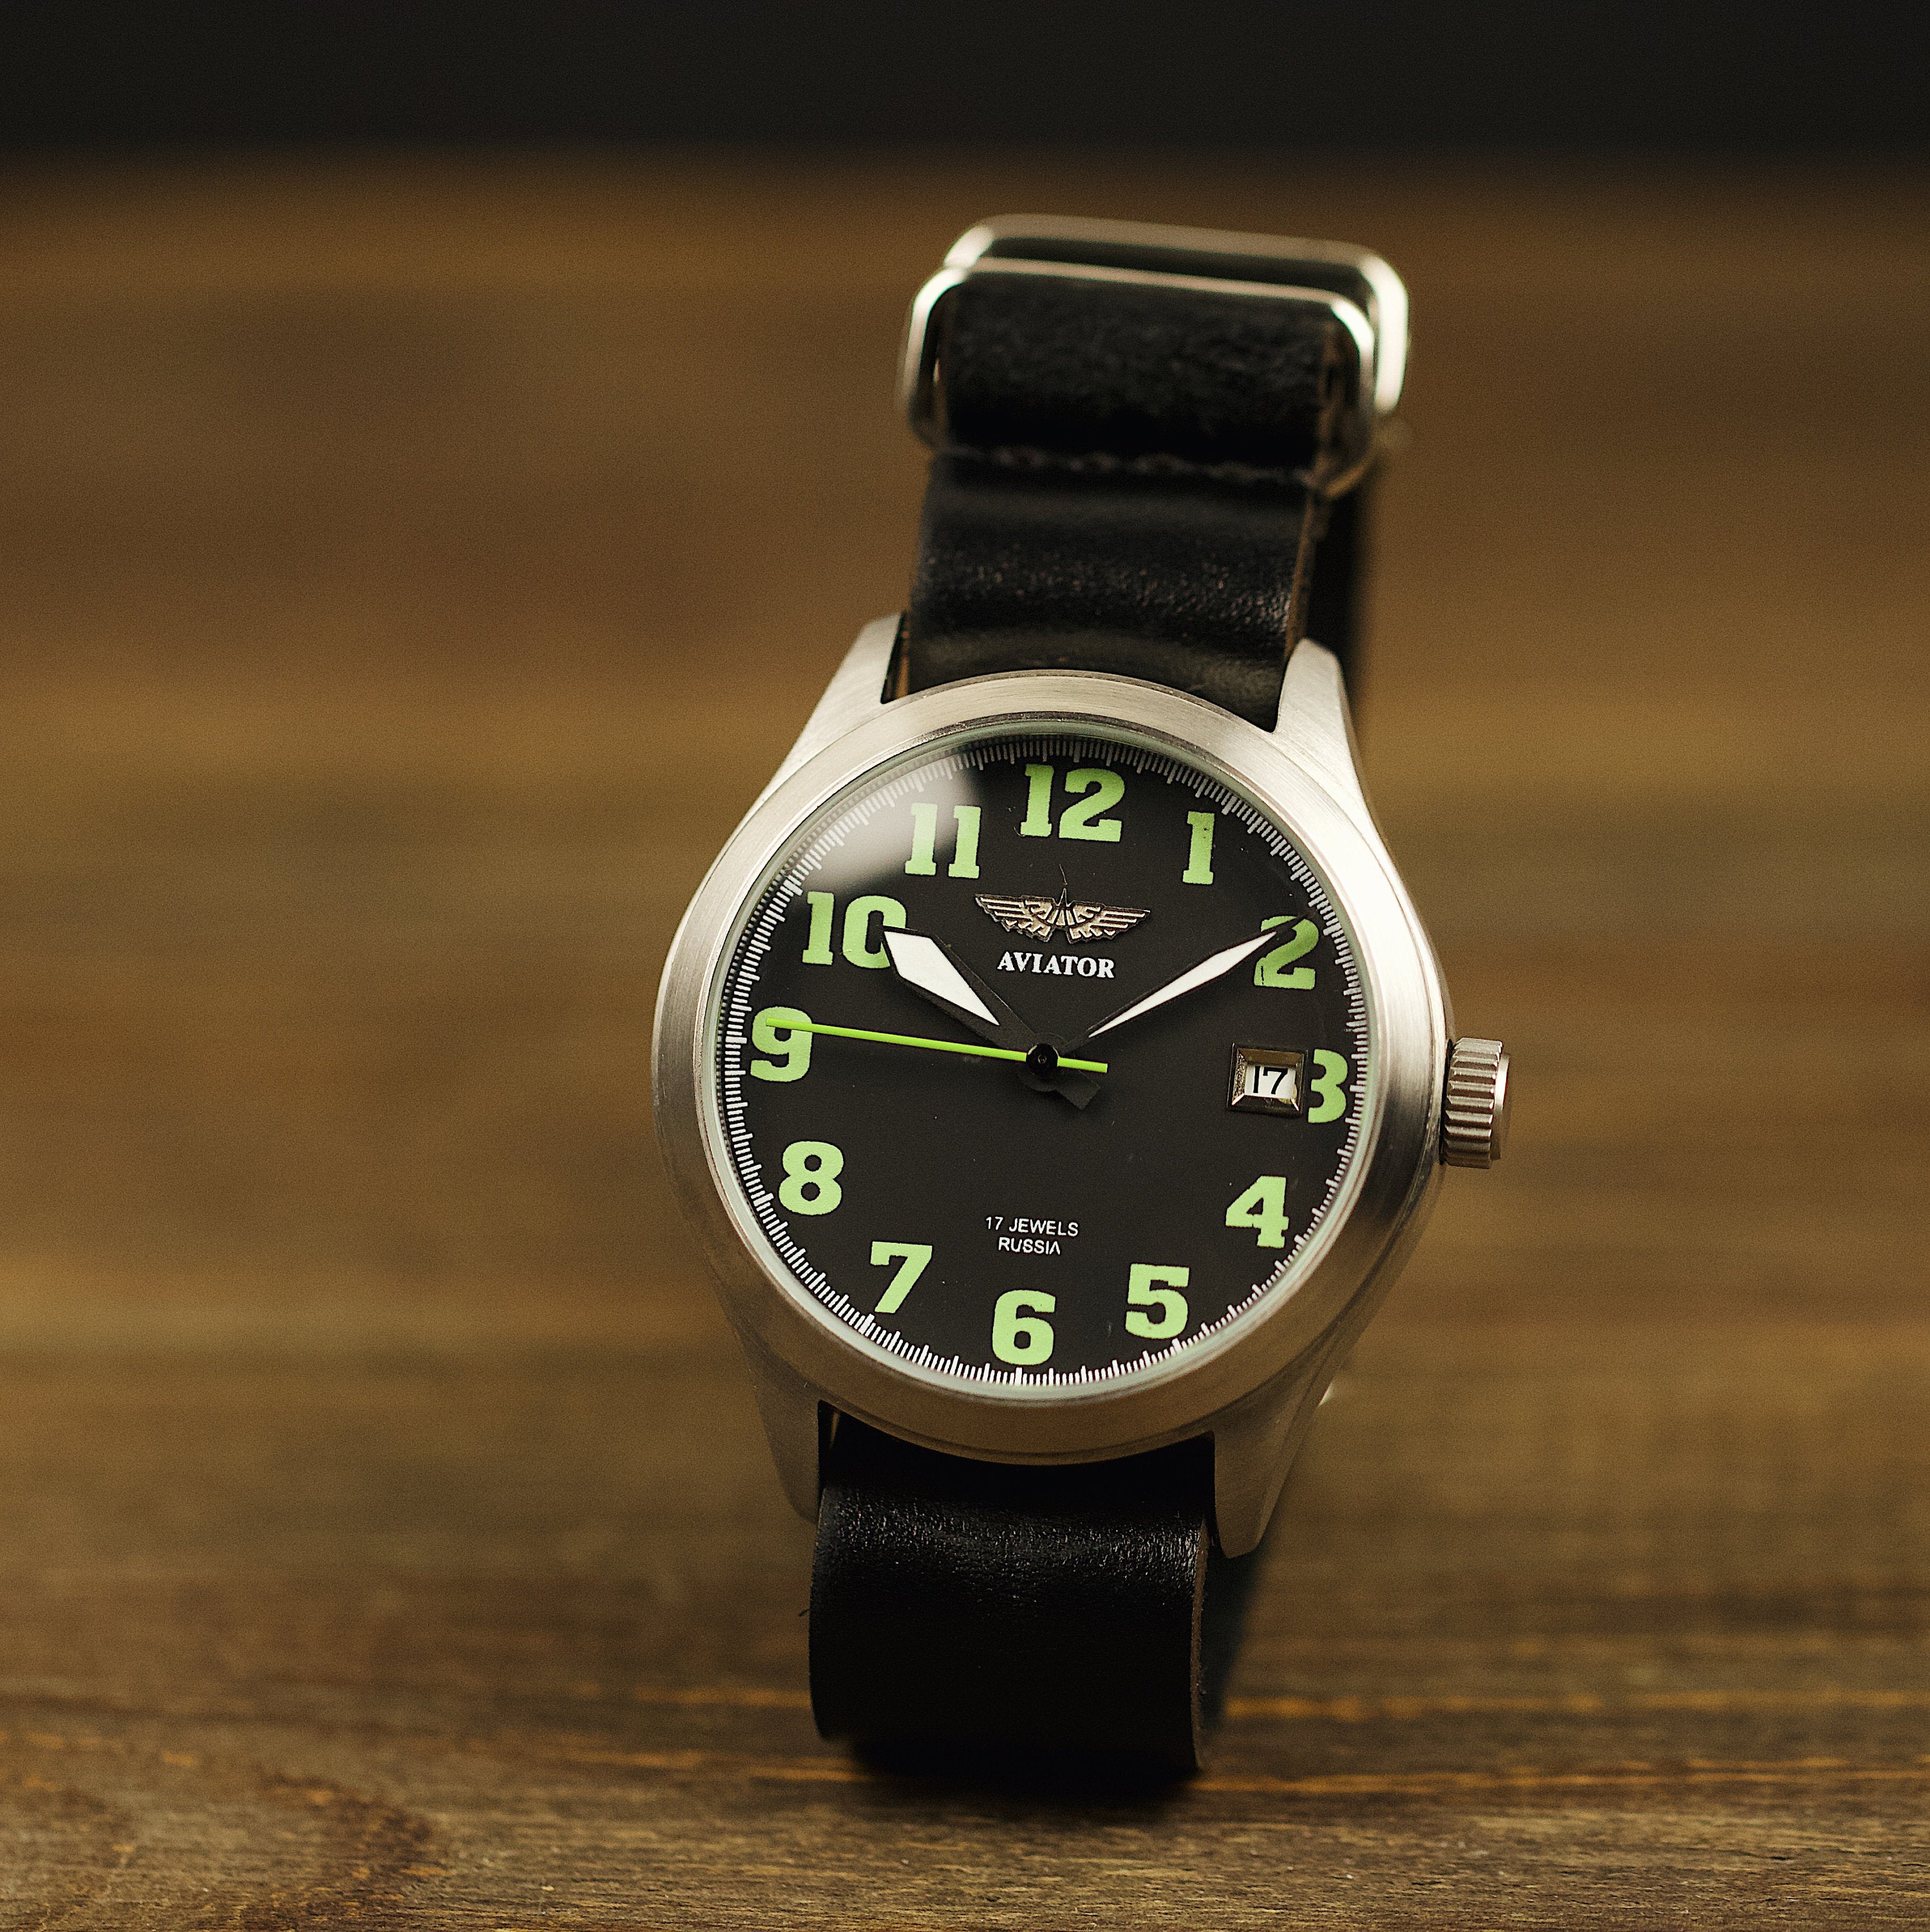 Vintage soviet men's wrist watch Aviator with leather nato strap